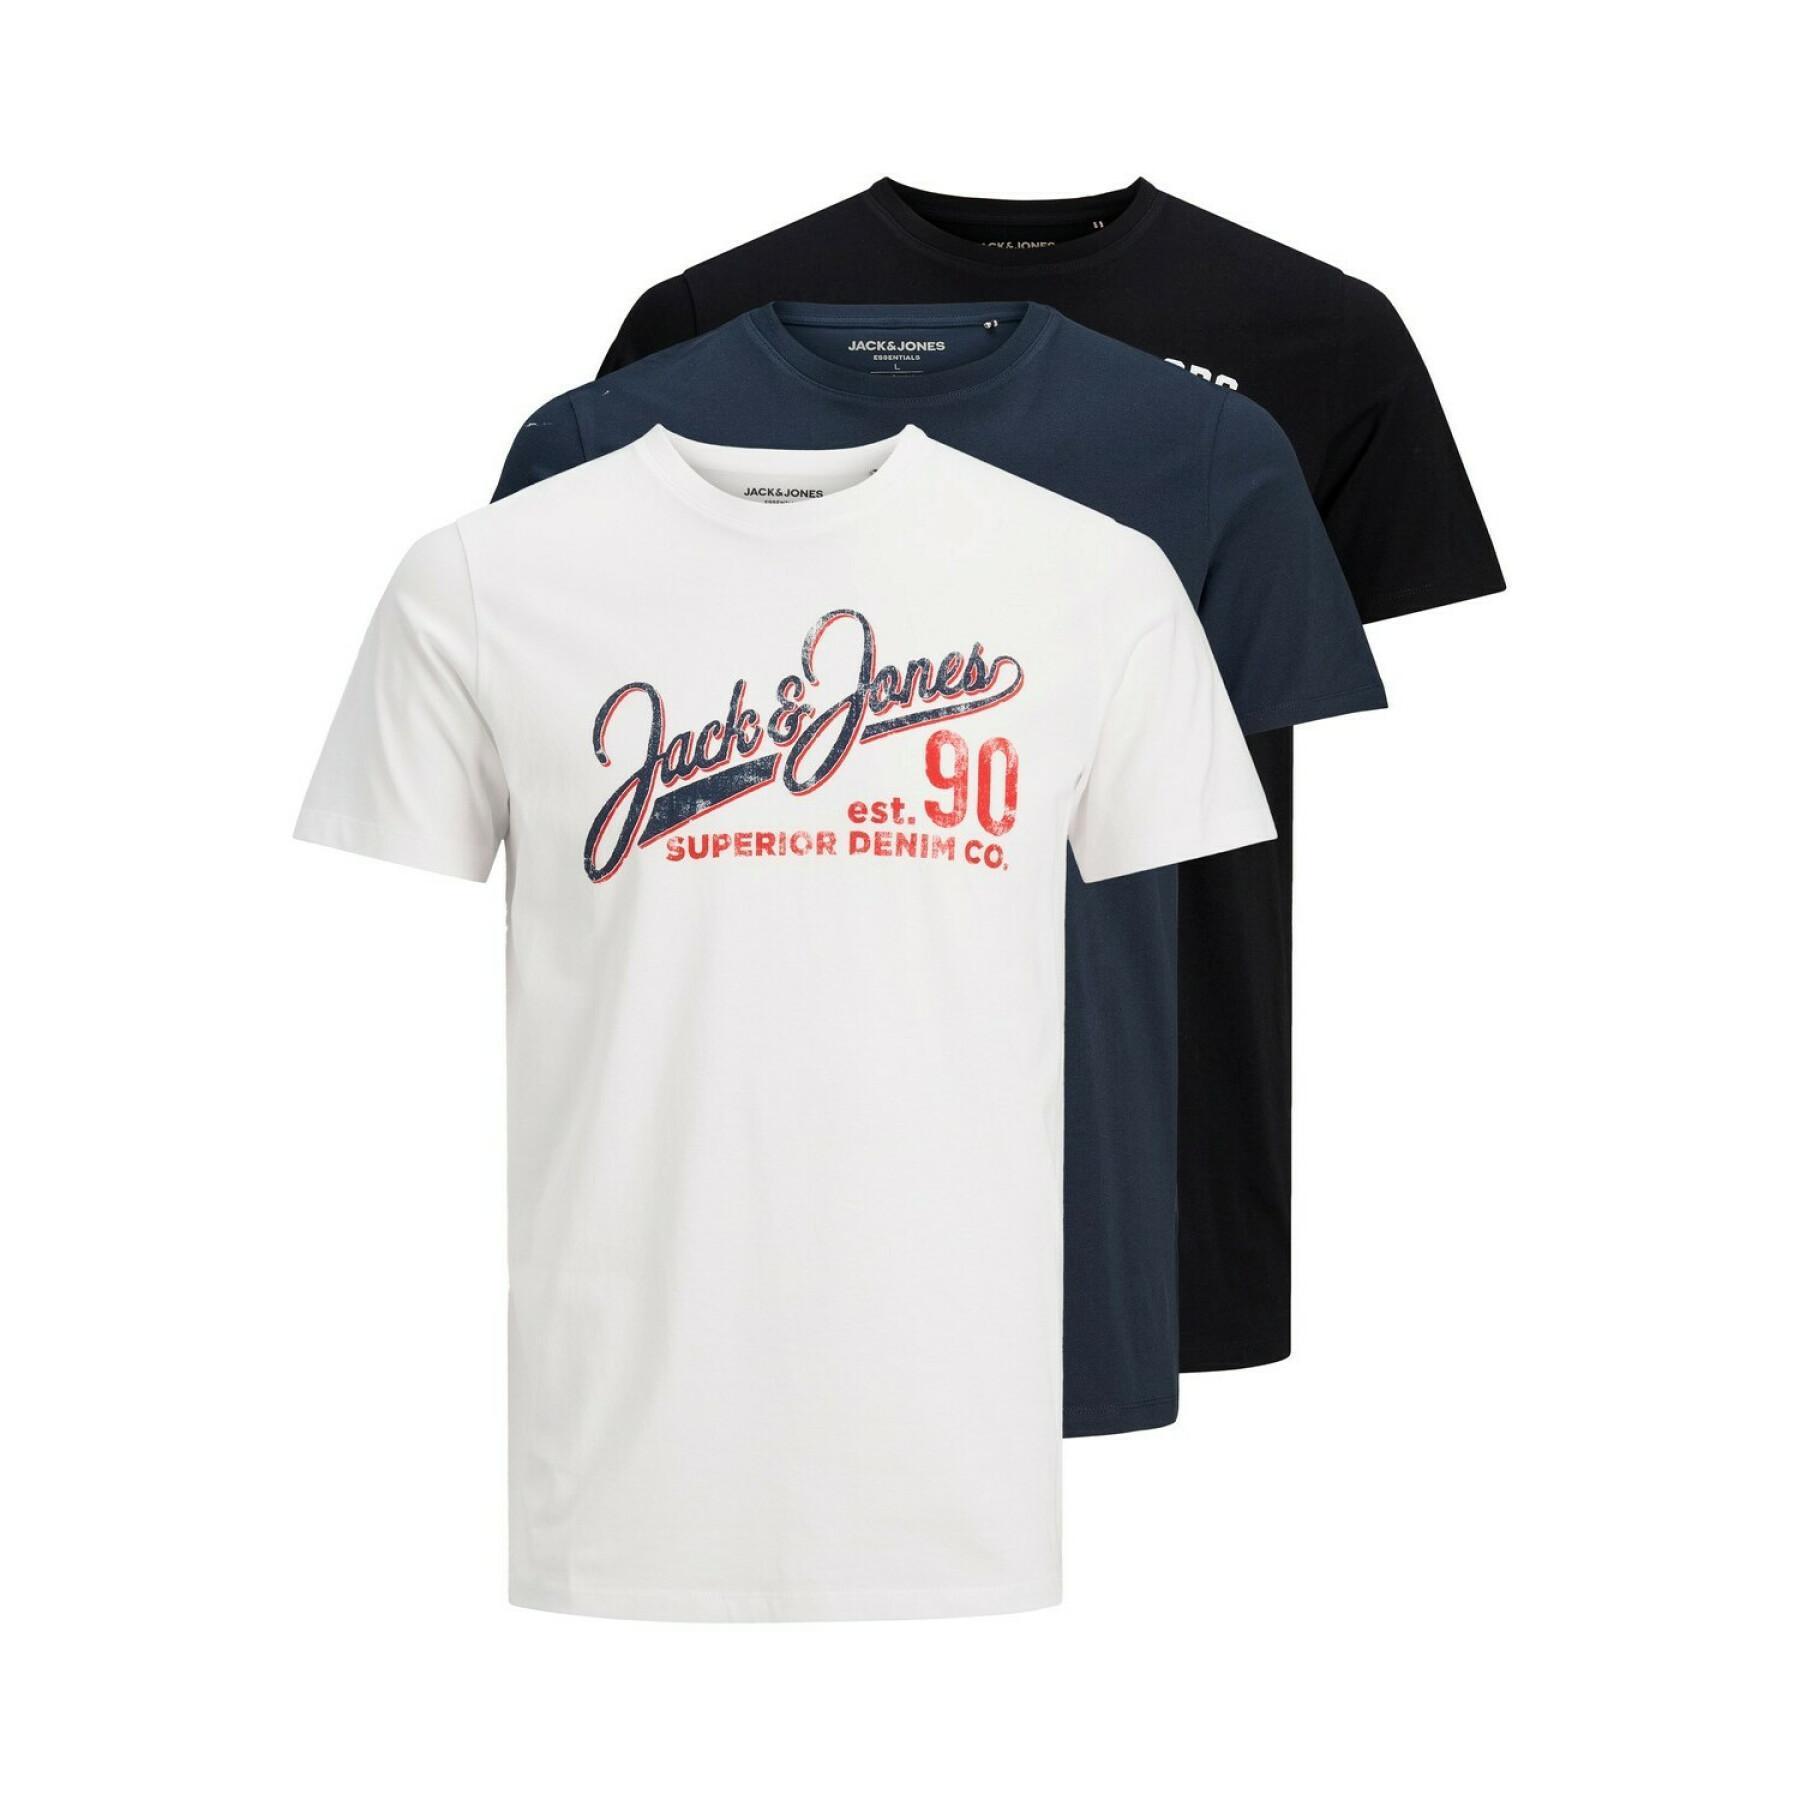 Confezione da 3 t-shirt Jack & Jones logo